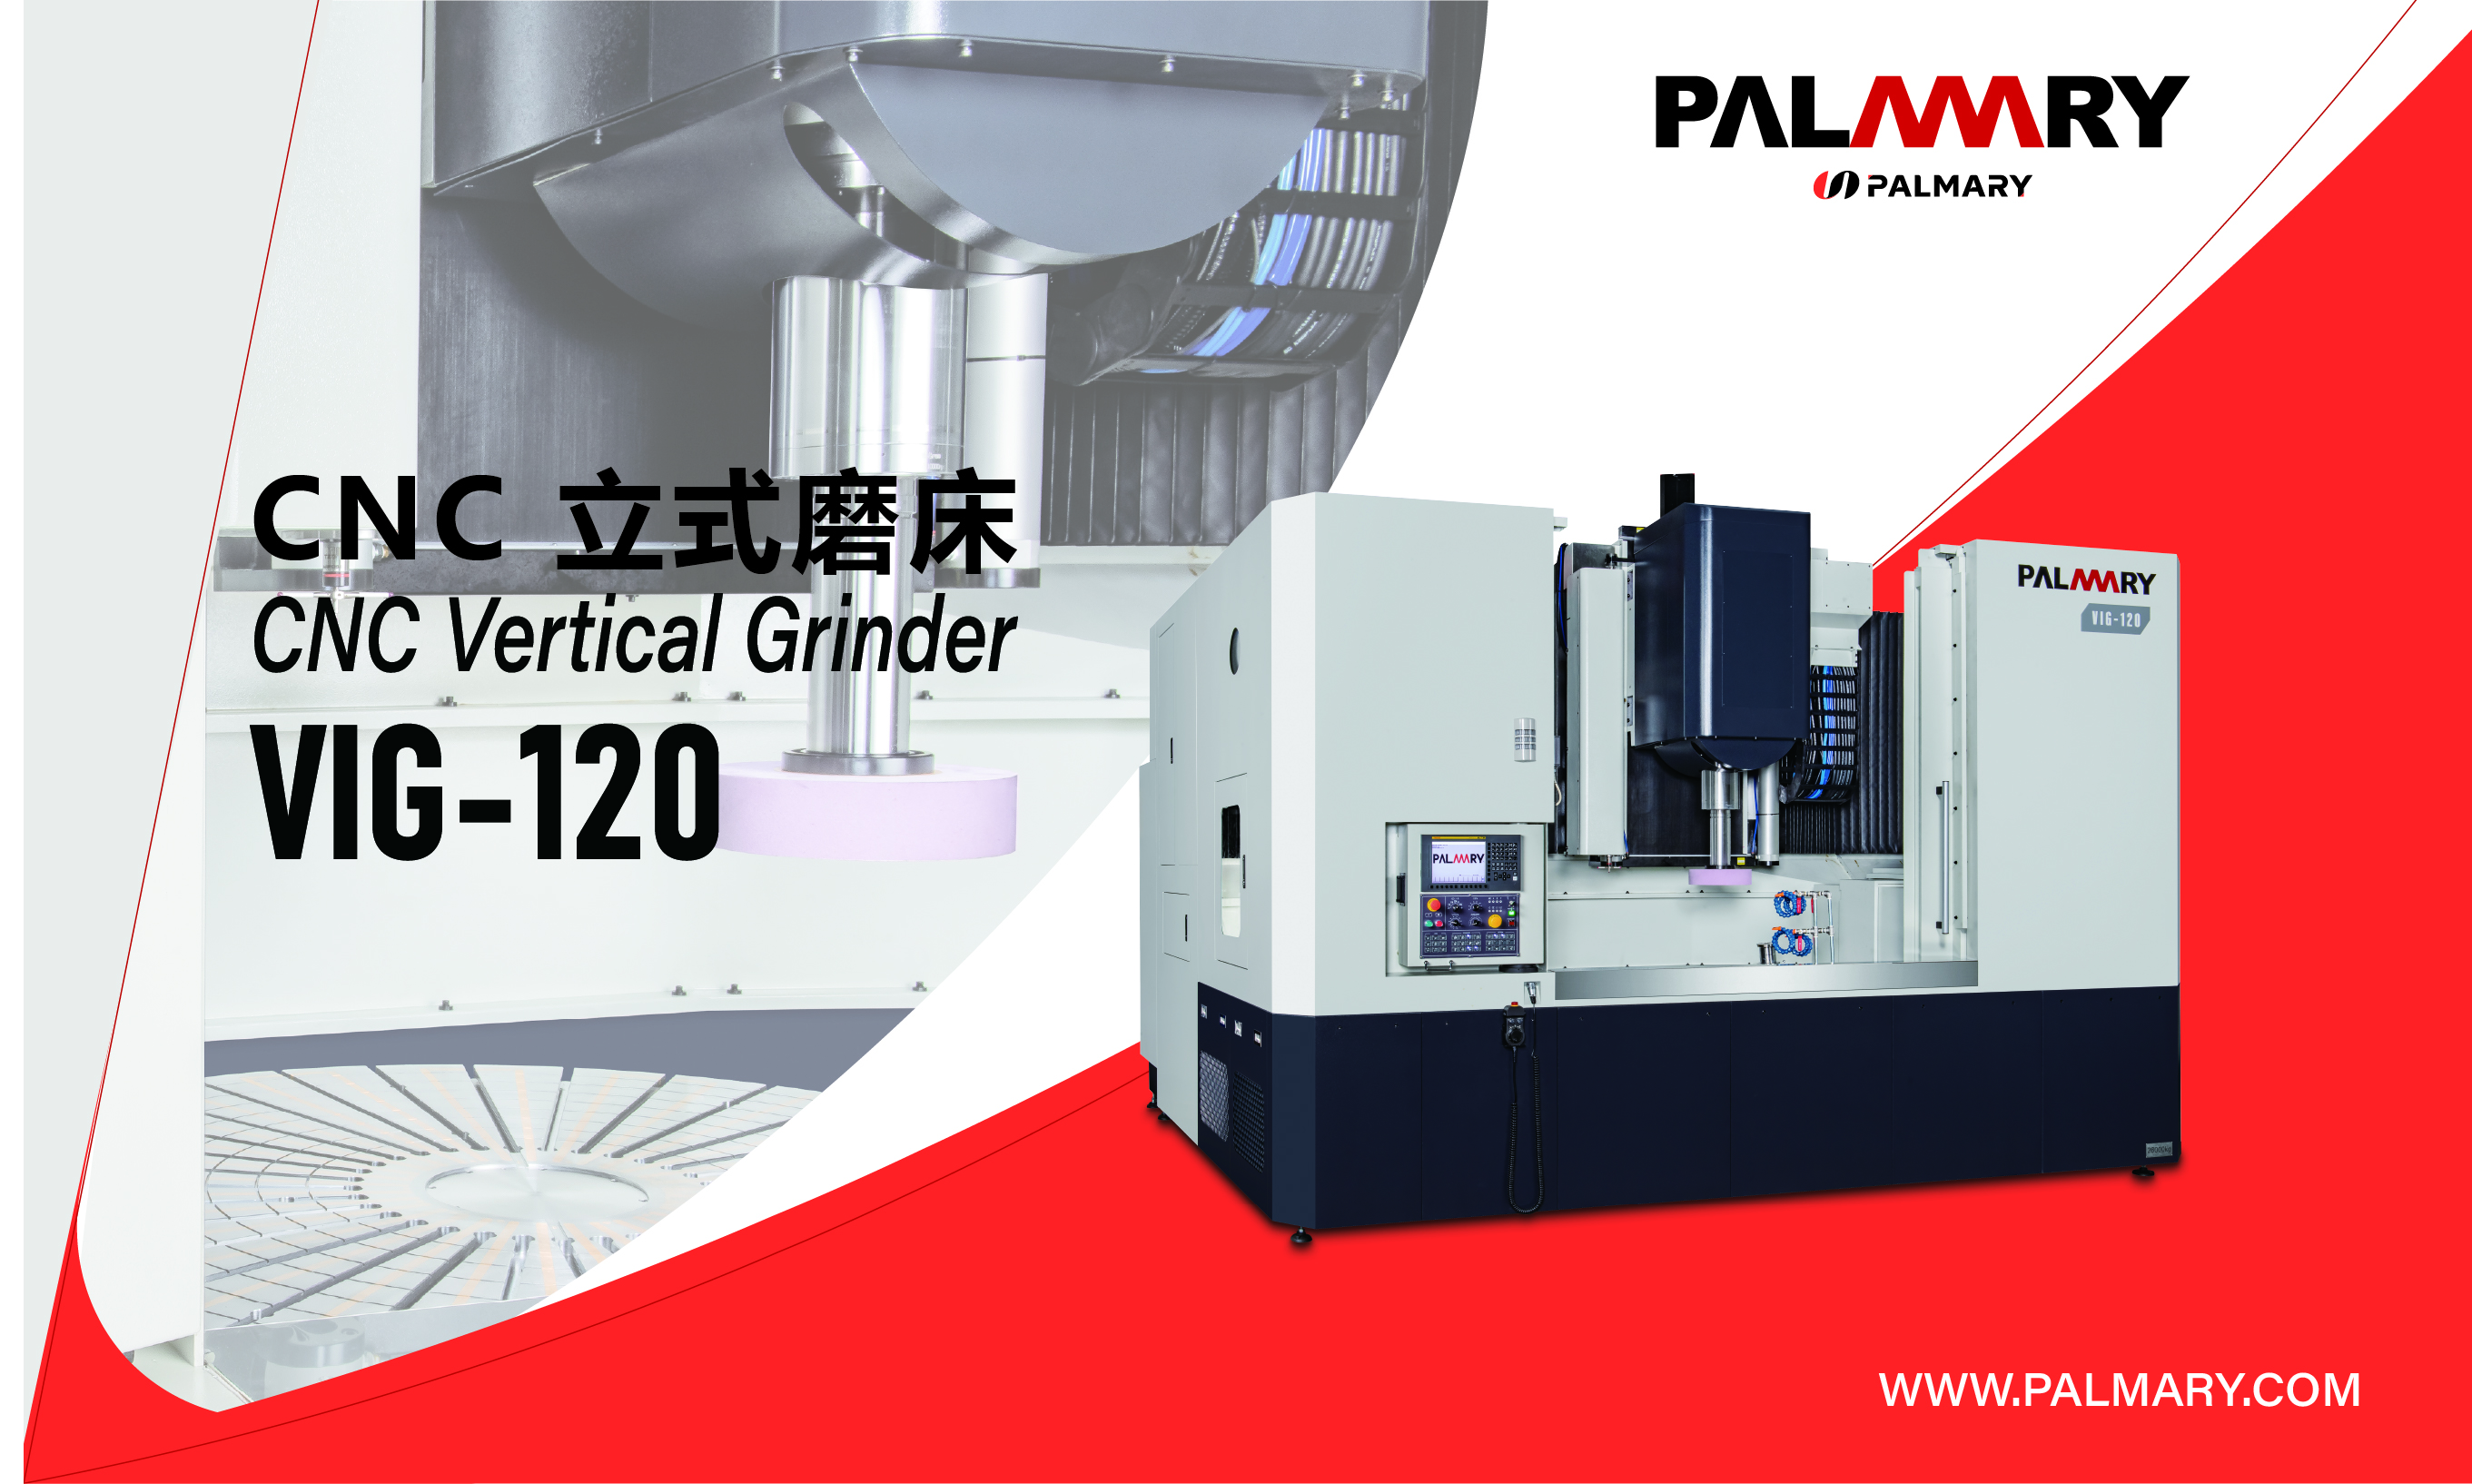 Catalog|PALMARY|CNC Vertical Grinder VIG-120